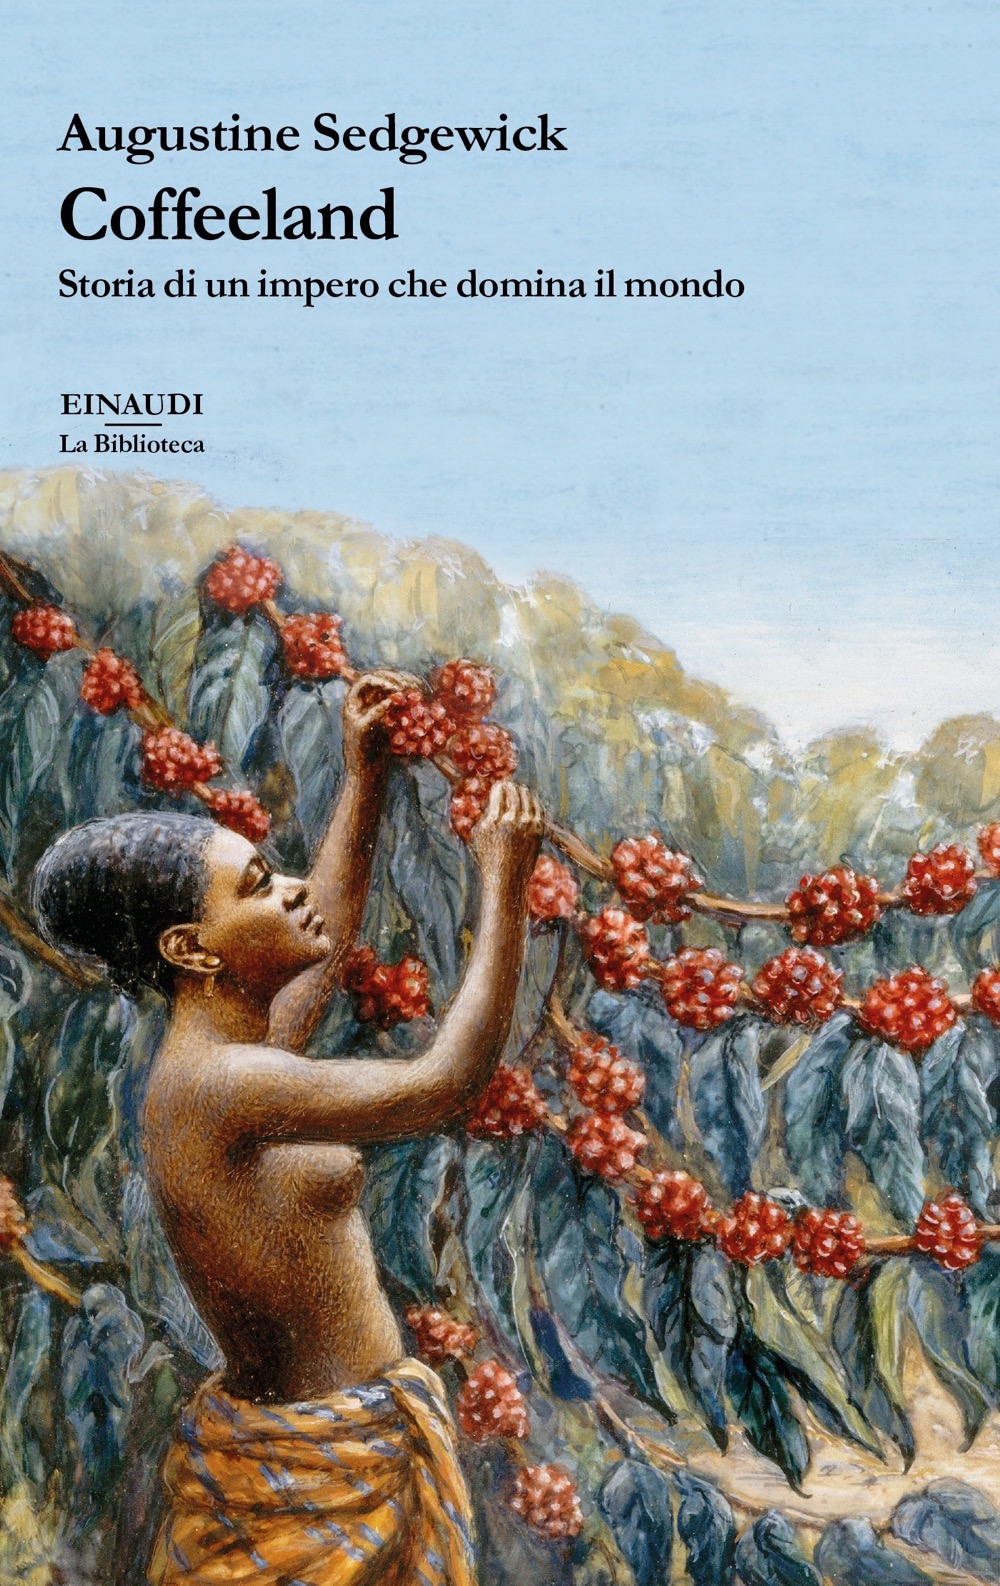 Coffeeland, Augustine Sedgewick. Giulio Einaudi Editore - La Biblioteca